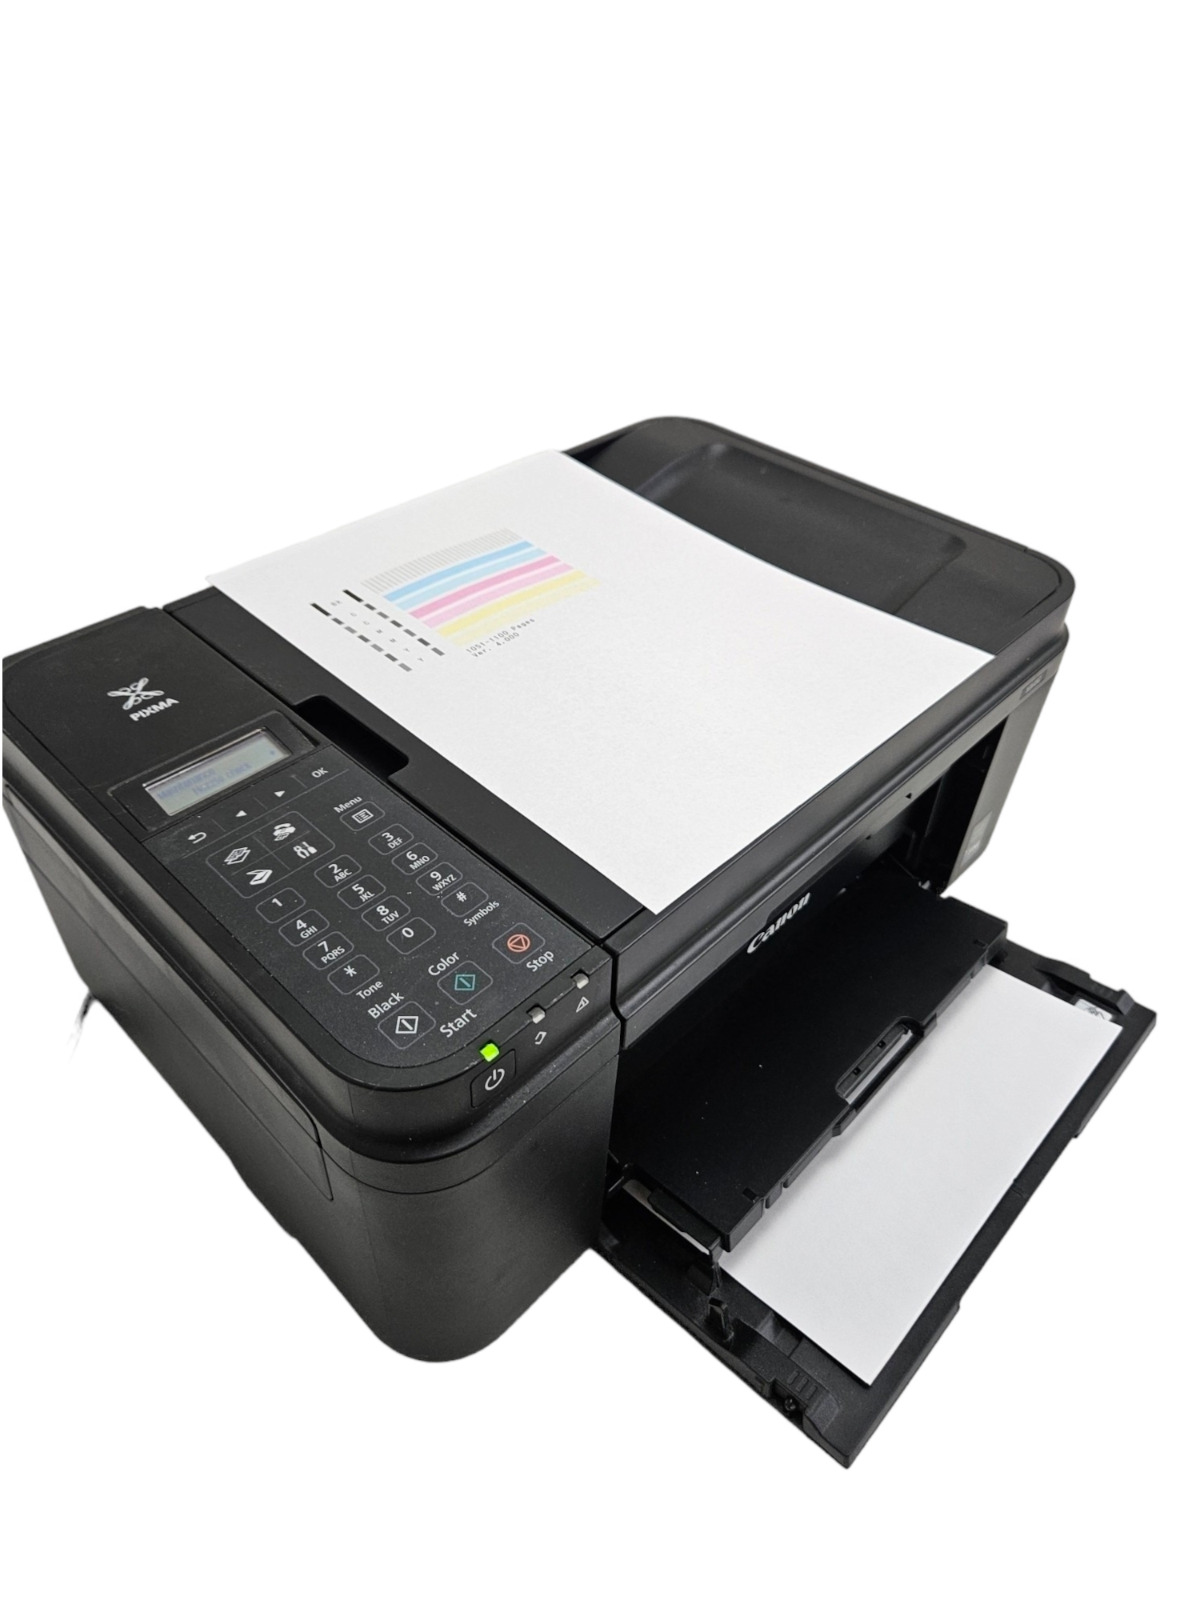 Canon Pixma MX490 MX492 Wireless All-In-One Printer Scanner Copier and Fax